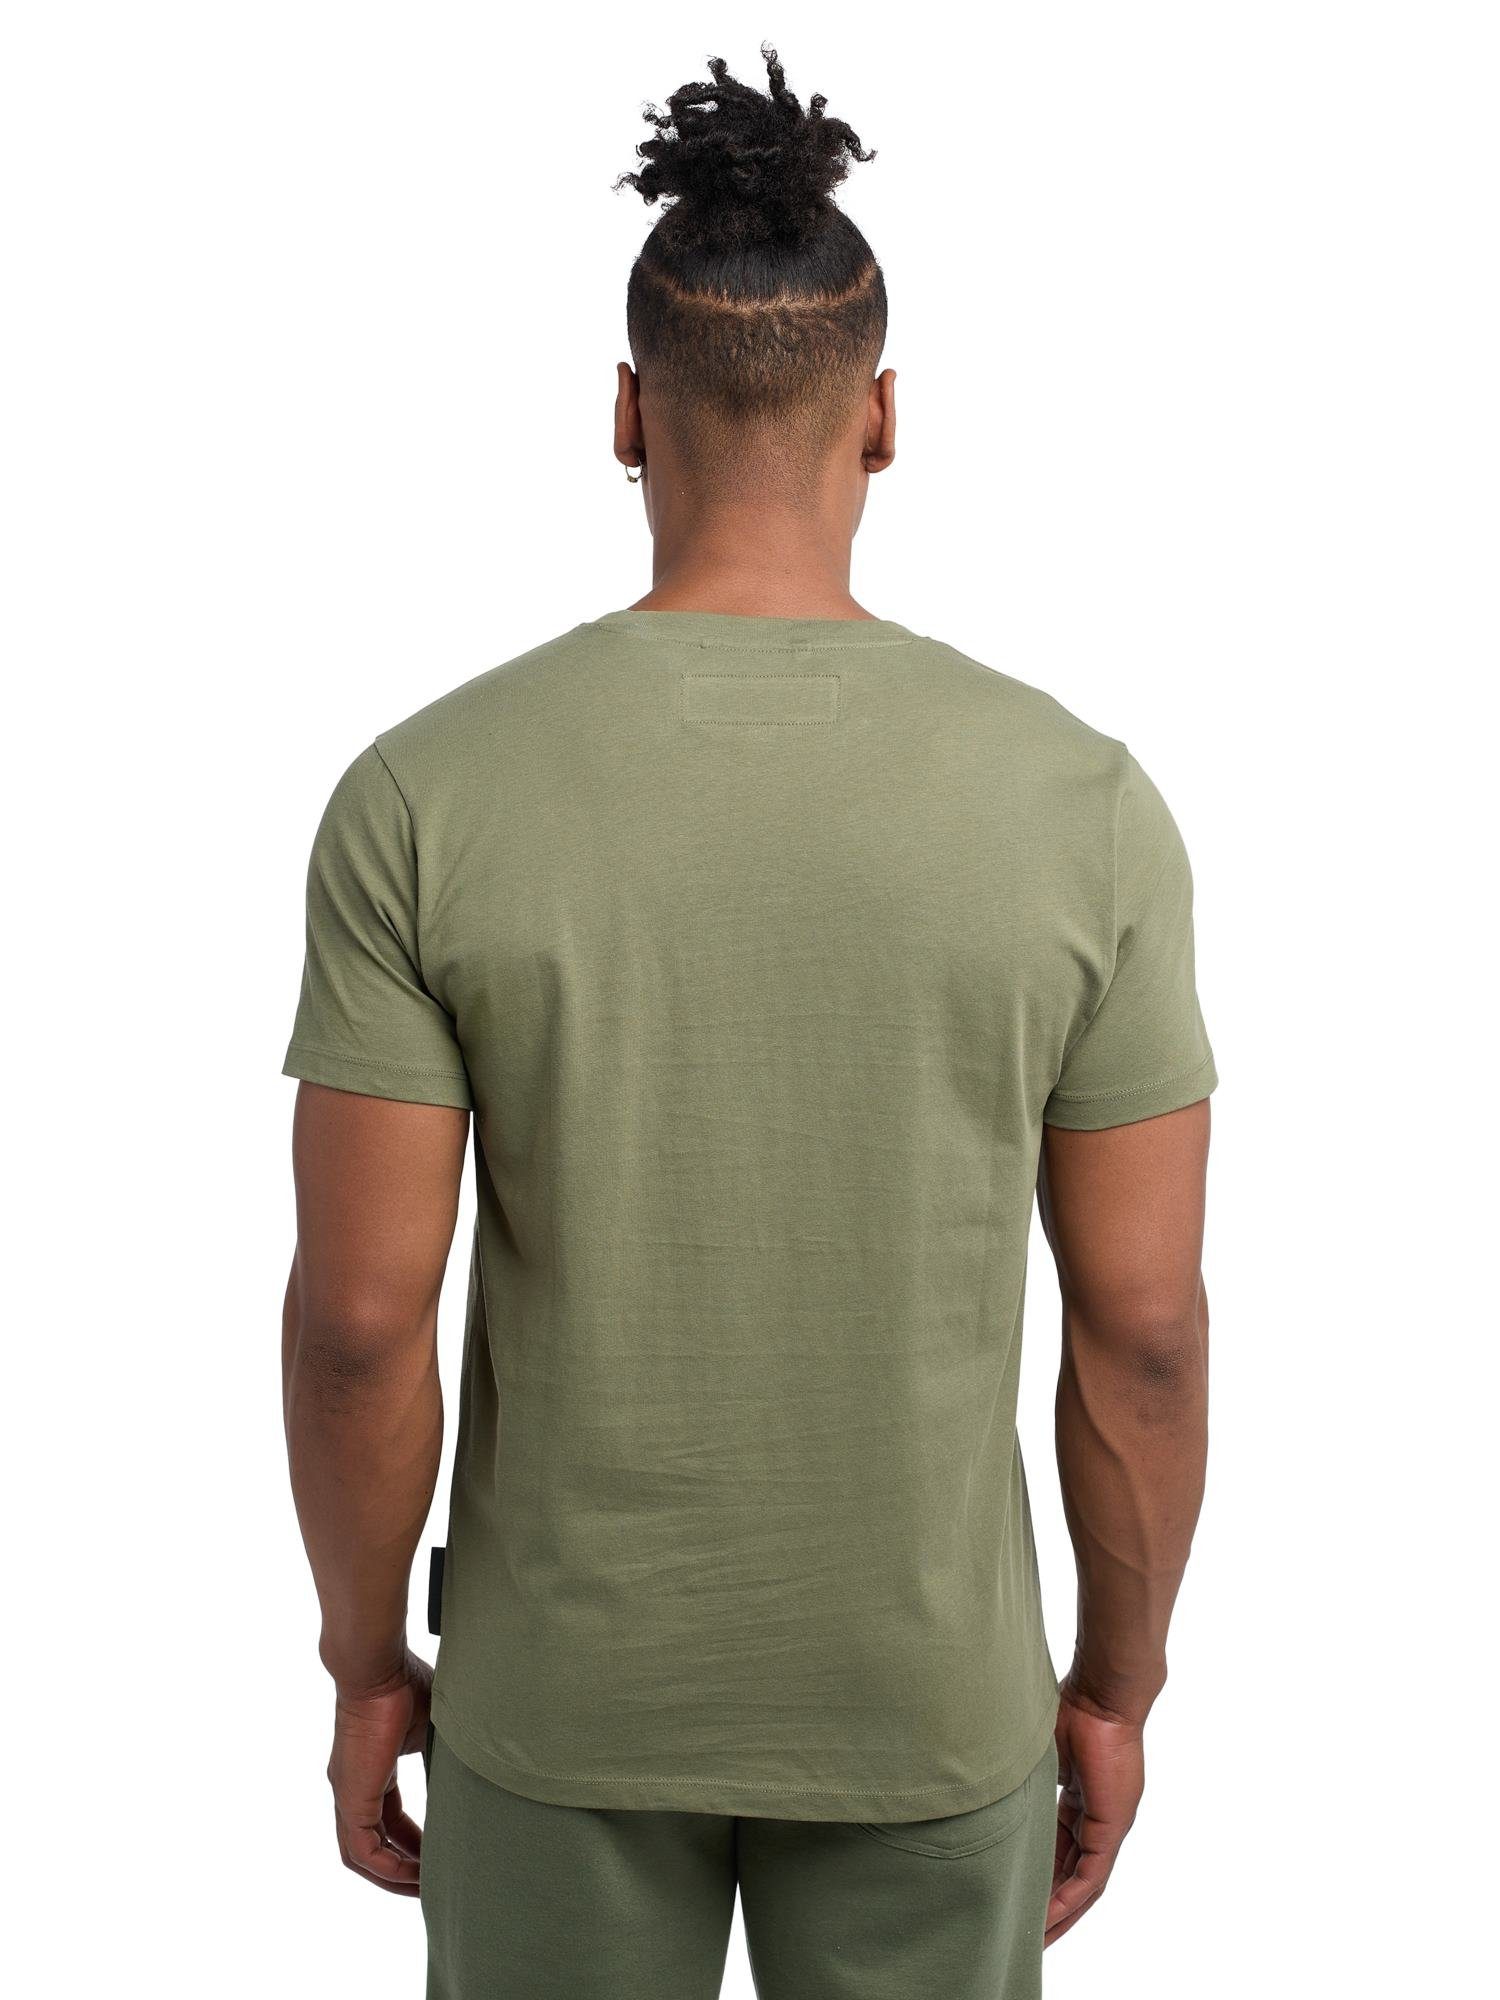 Grün Bruno Abbott T-Shirt Banani